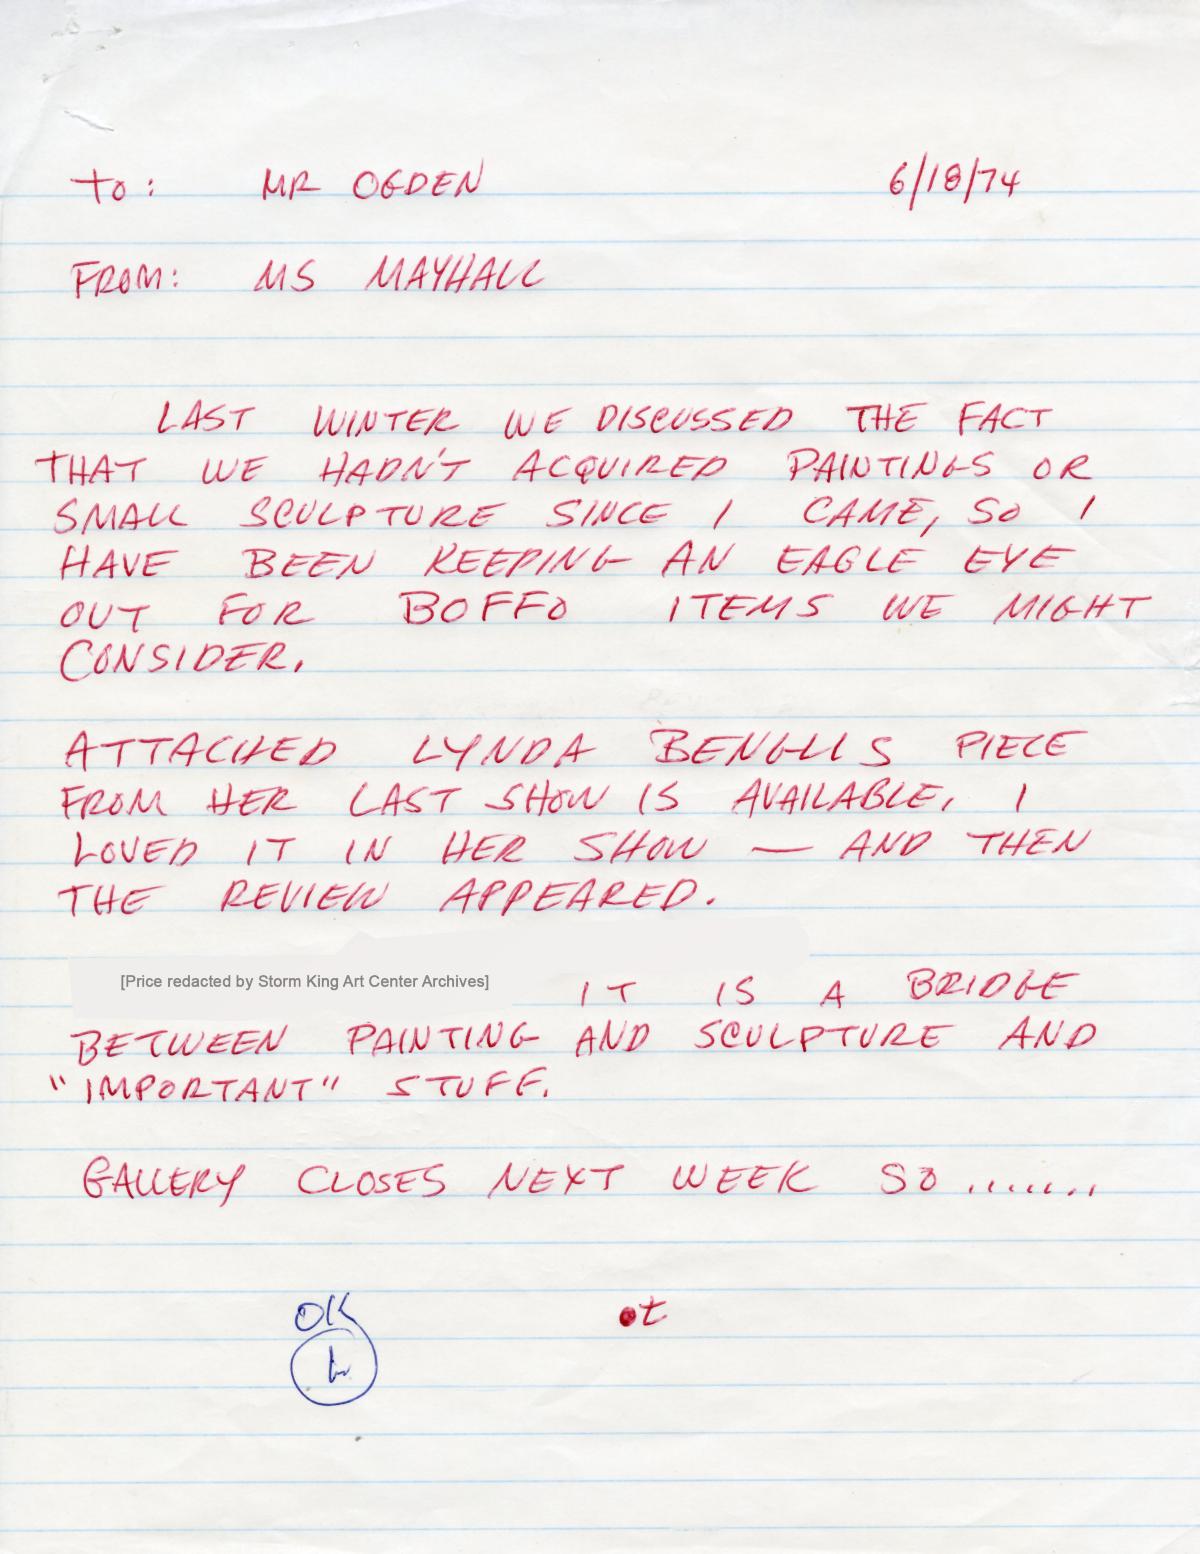 Correspondence from Dorothy Mayhall to Ralph E. Ogden regarding the acquisition of Lynda Benglis' <em>Nu</em>, June 16, 1974